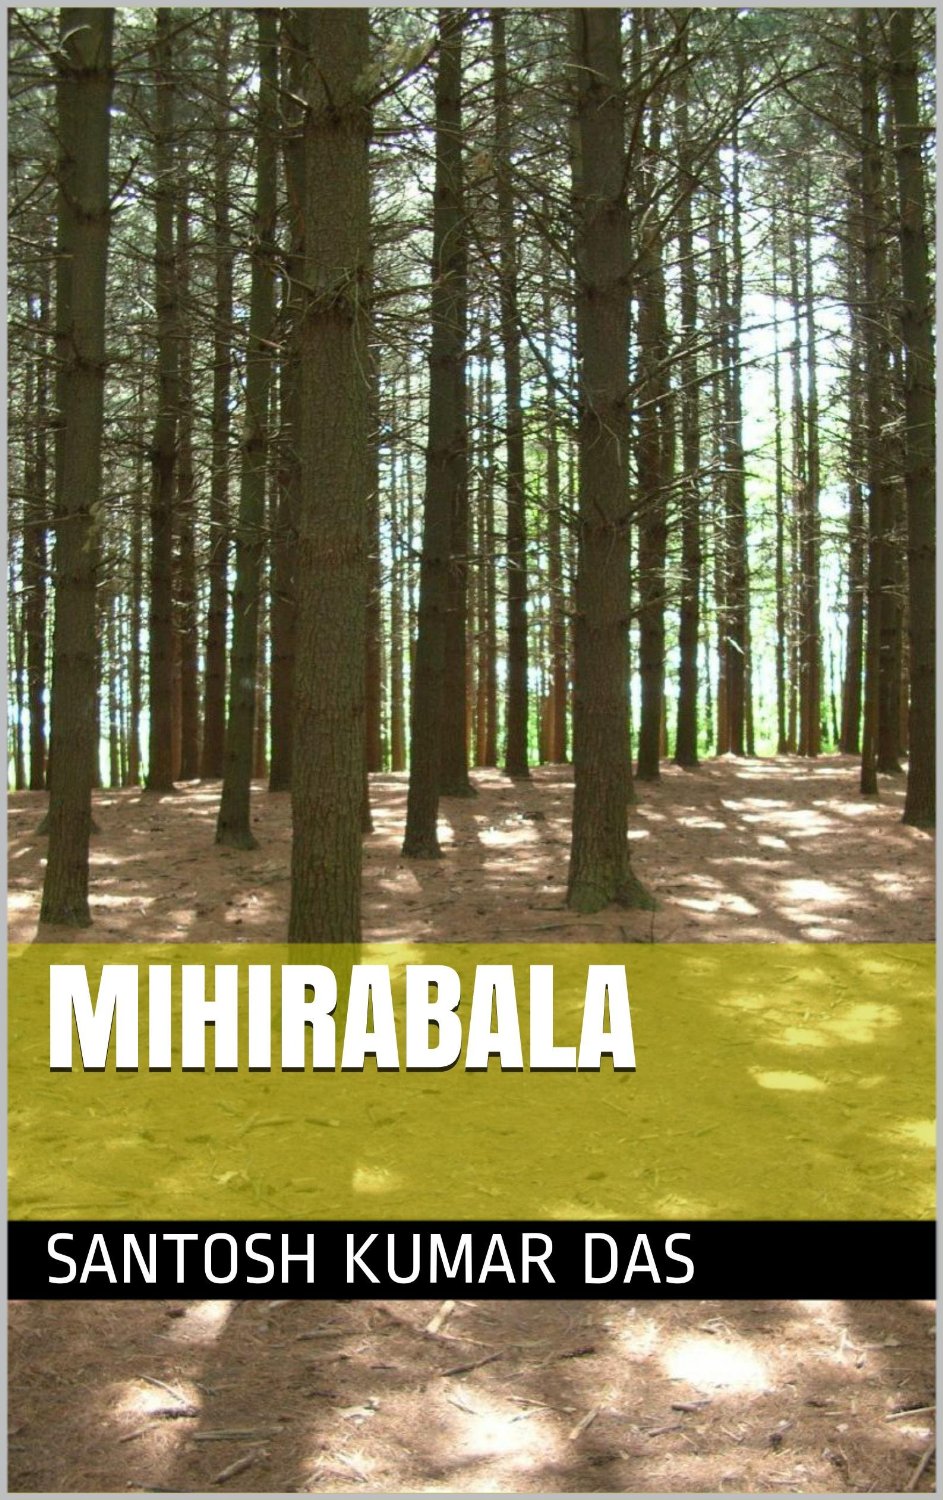 MIHIRABALA by Santosh Kumar Das